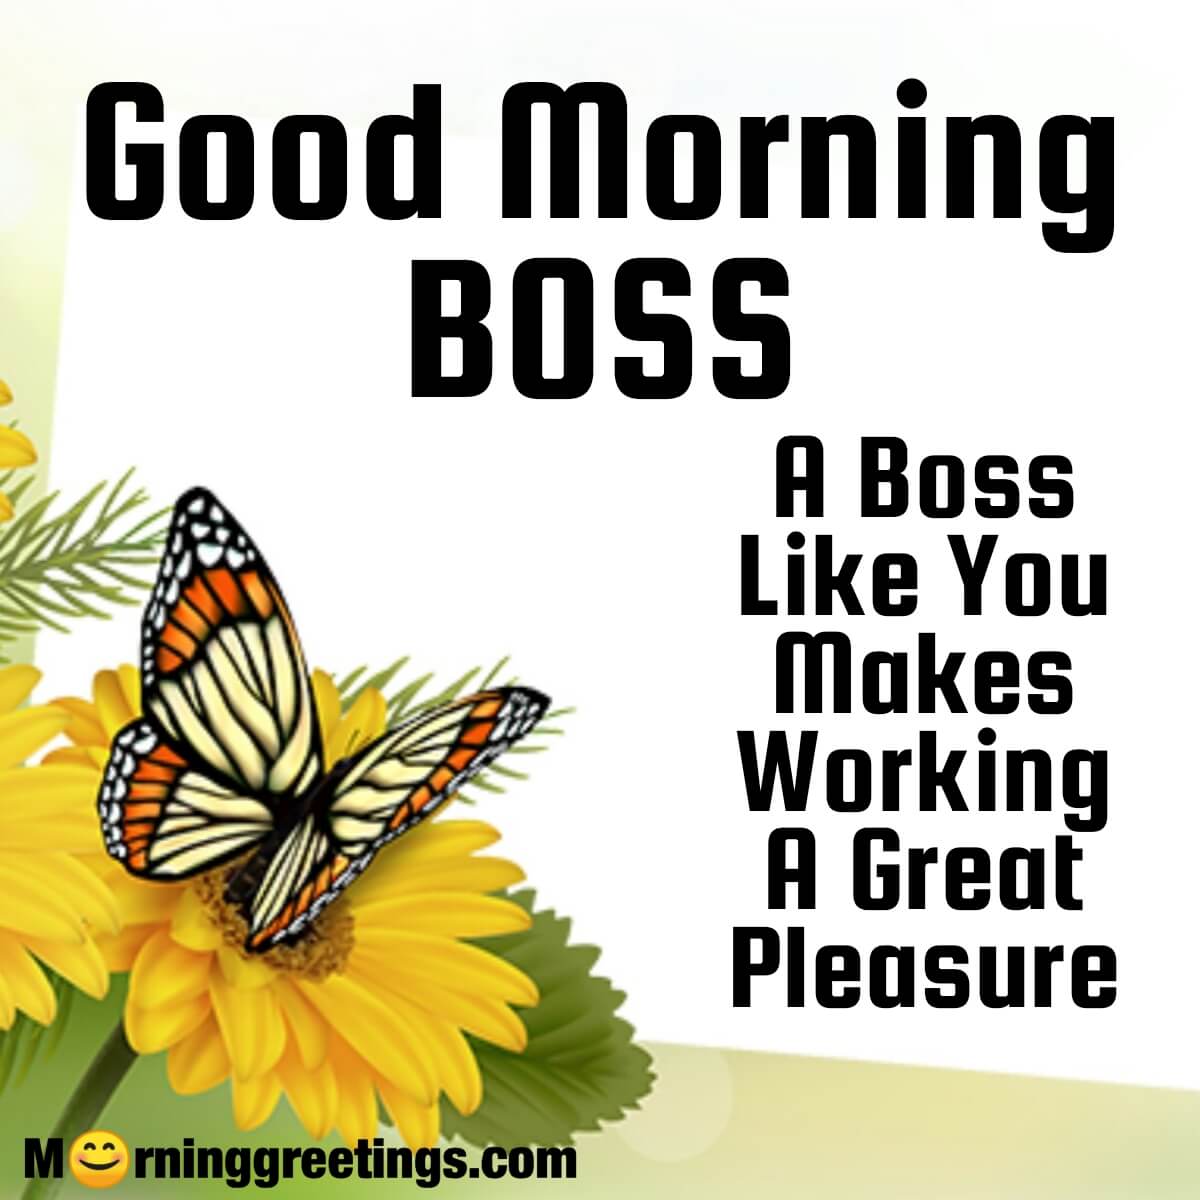 Good Morning Boss Message